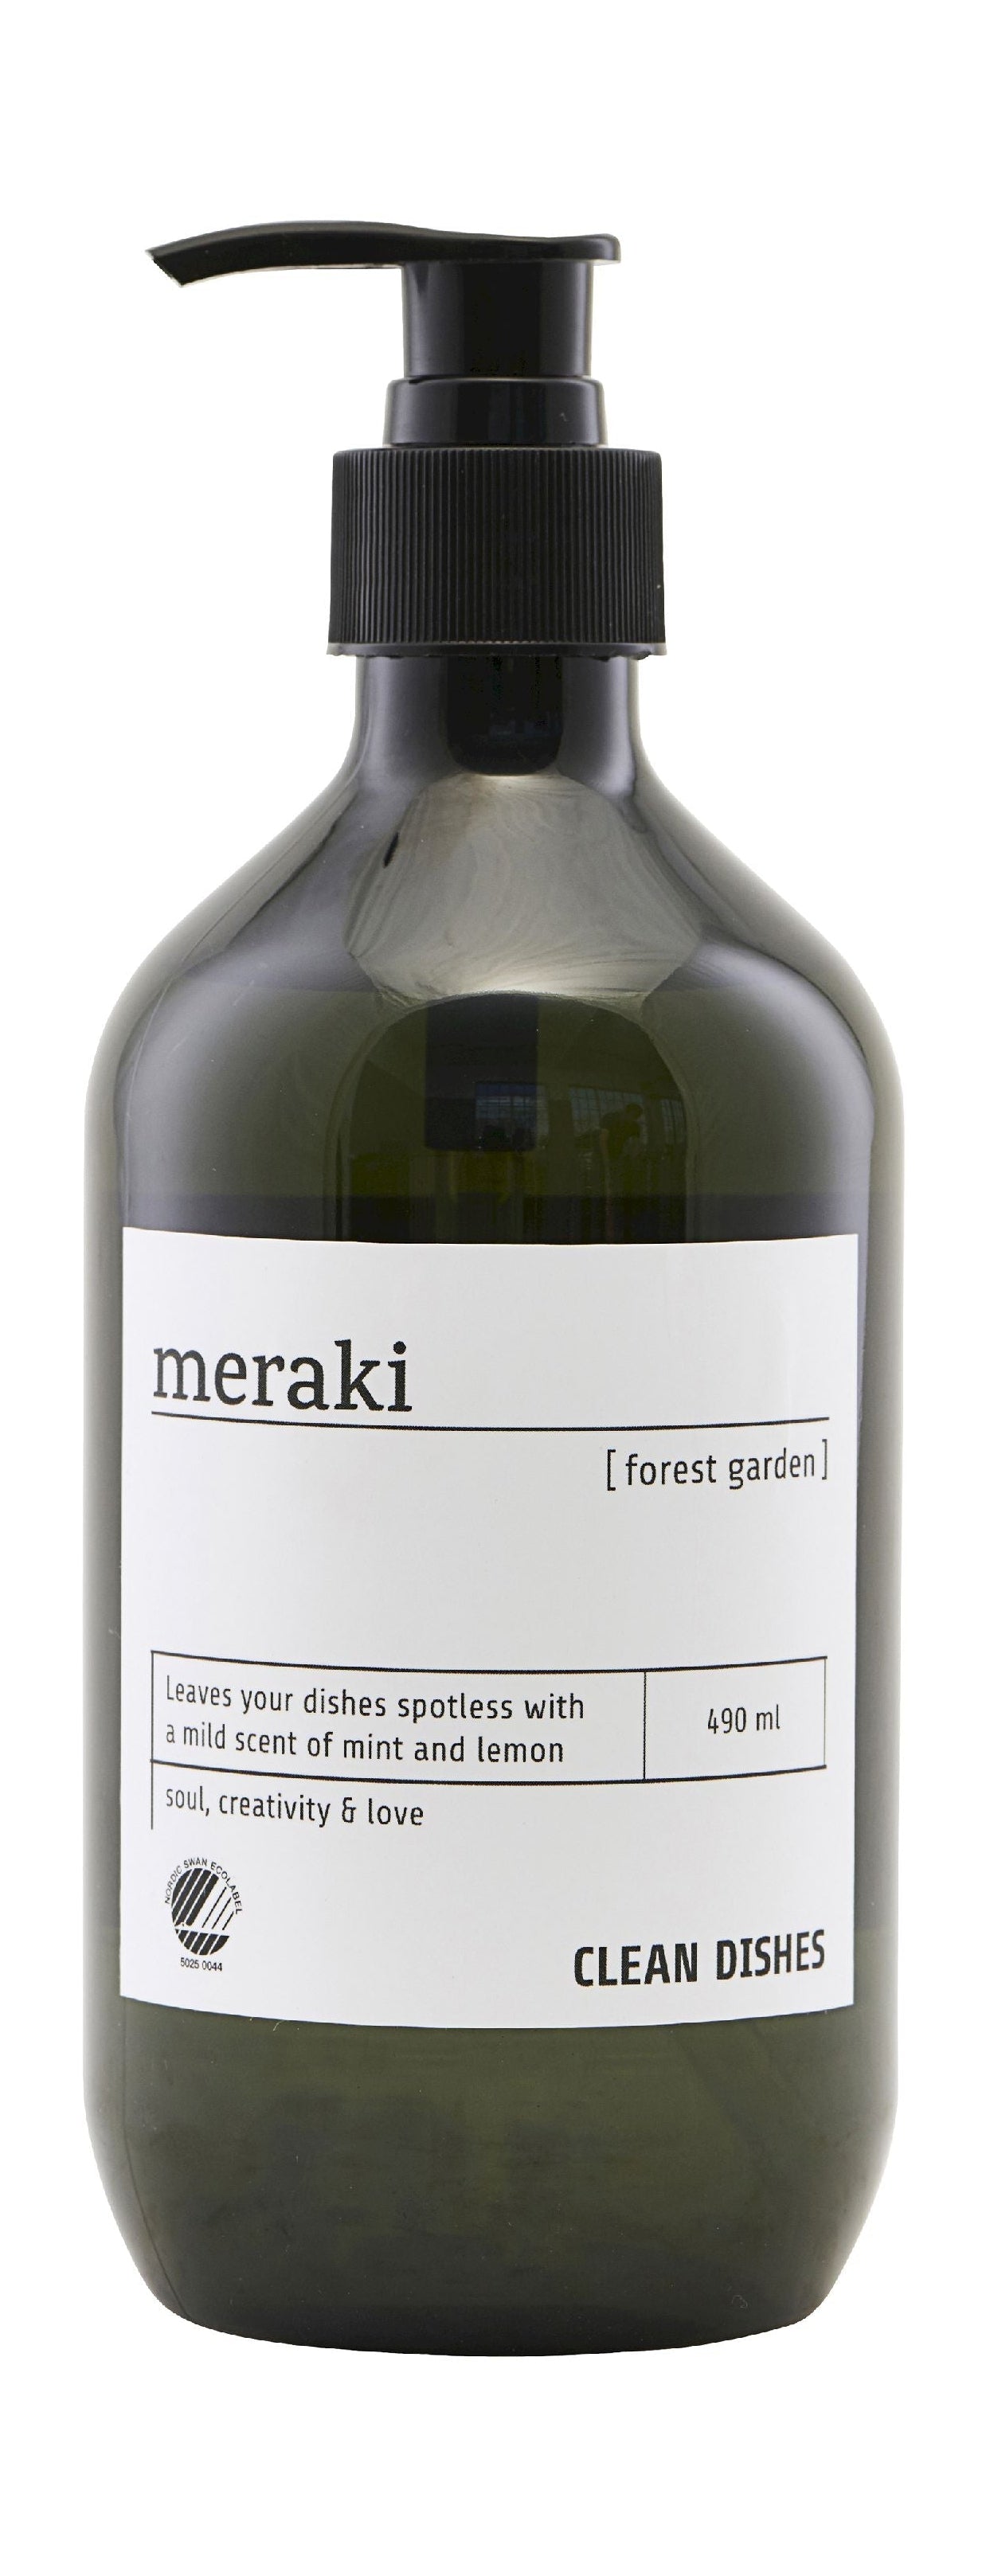 Detergente Meraki 490 ml, giardino forestale